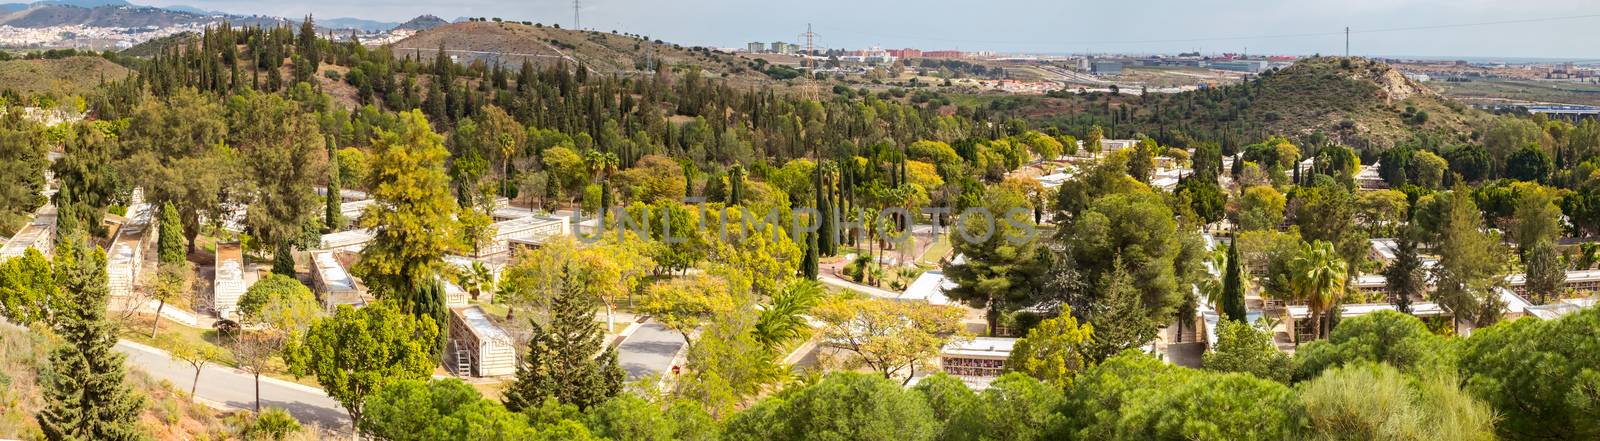 Malaga, Spain - February 24, 2018. Panorama view over the Malaga Park Cemetery